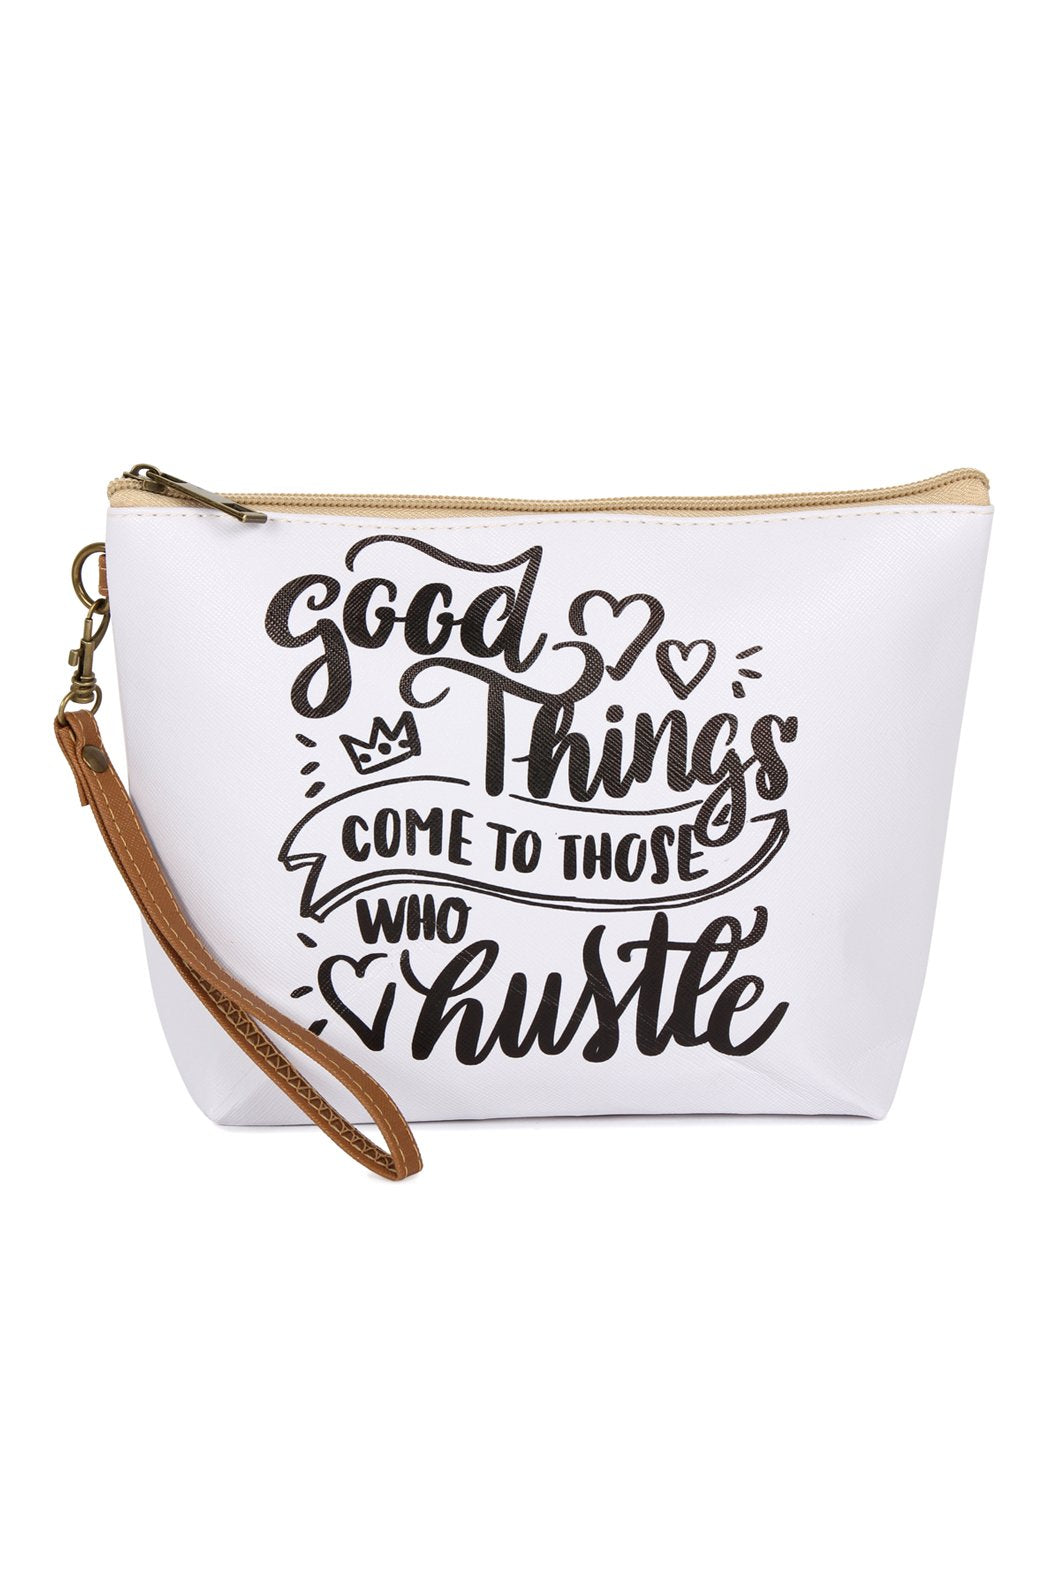 Hdg2470 - "Good Things" Cosmetic Bag